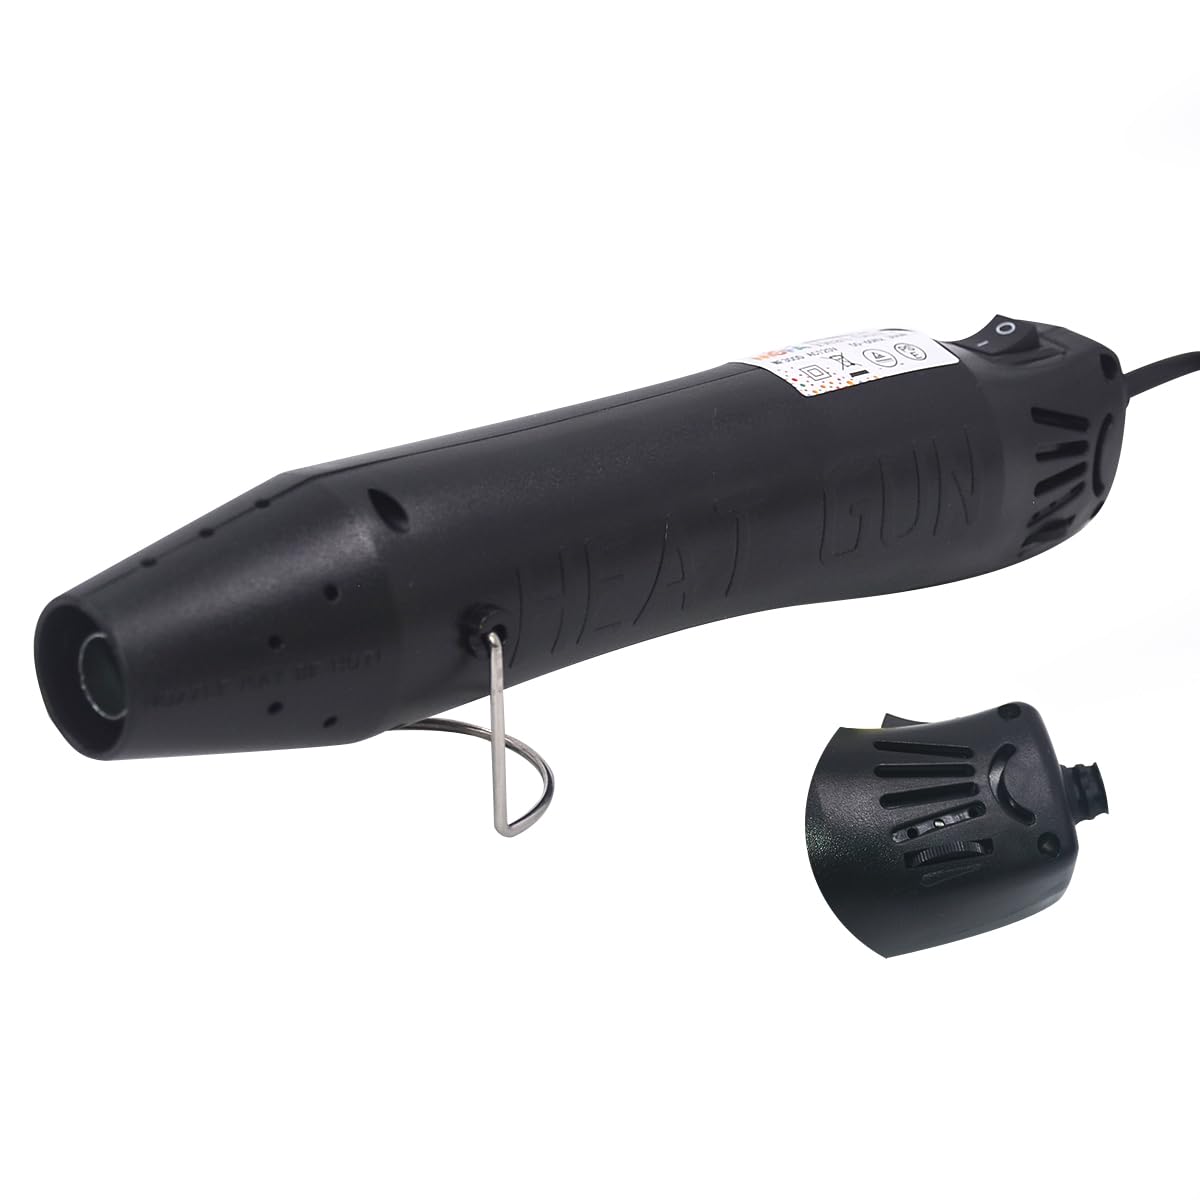 MOFA mofa Resin Heat gun,6.6ft Cable 300W Hot Air Gun for Crafting,Acrylic  Paint Dryer Multi-Purpose Electric Heating Nozzle (Black T